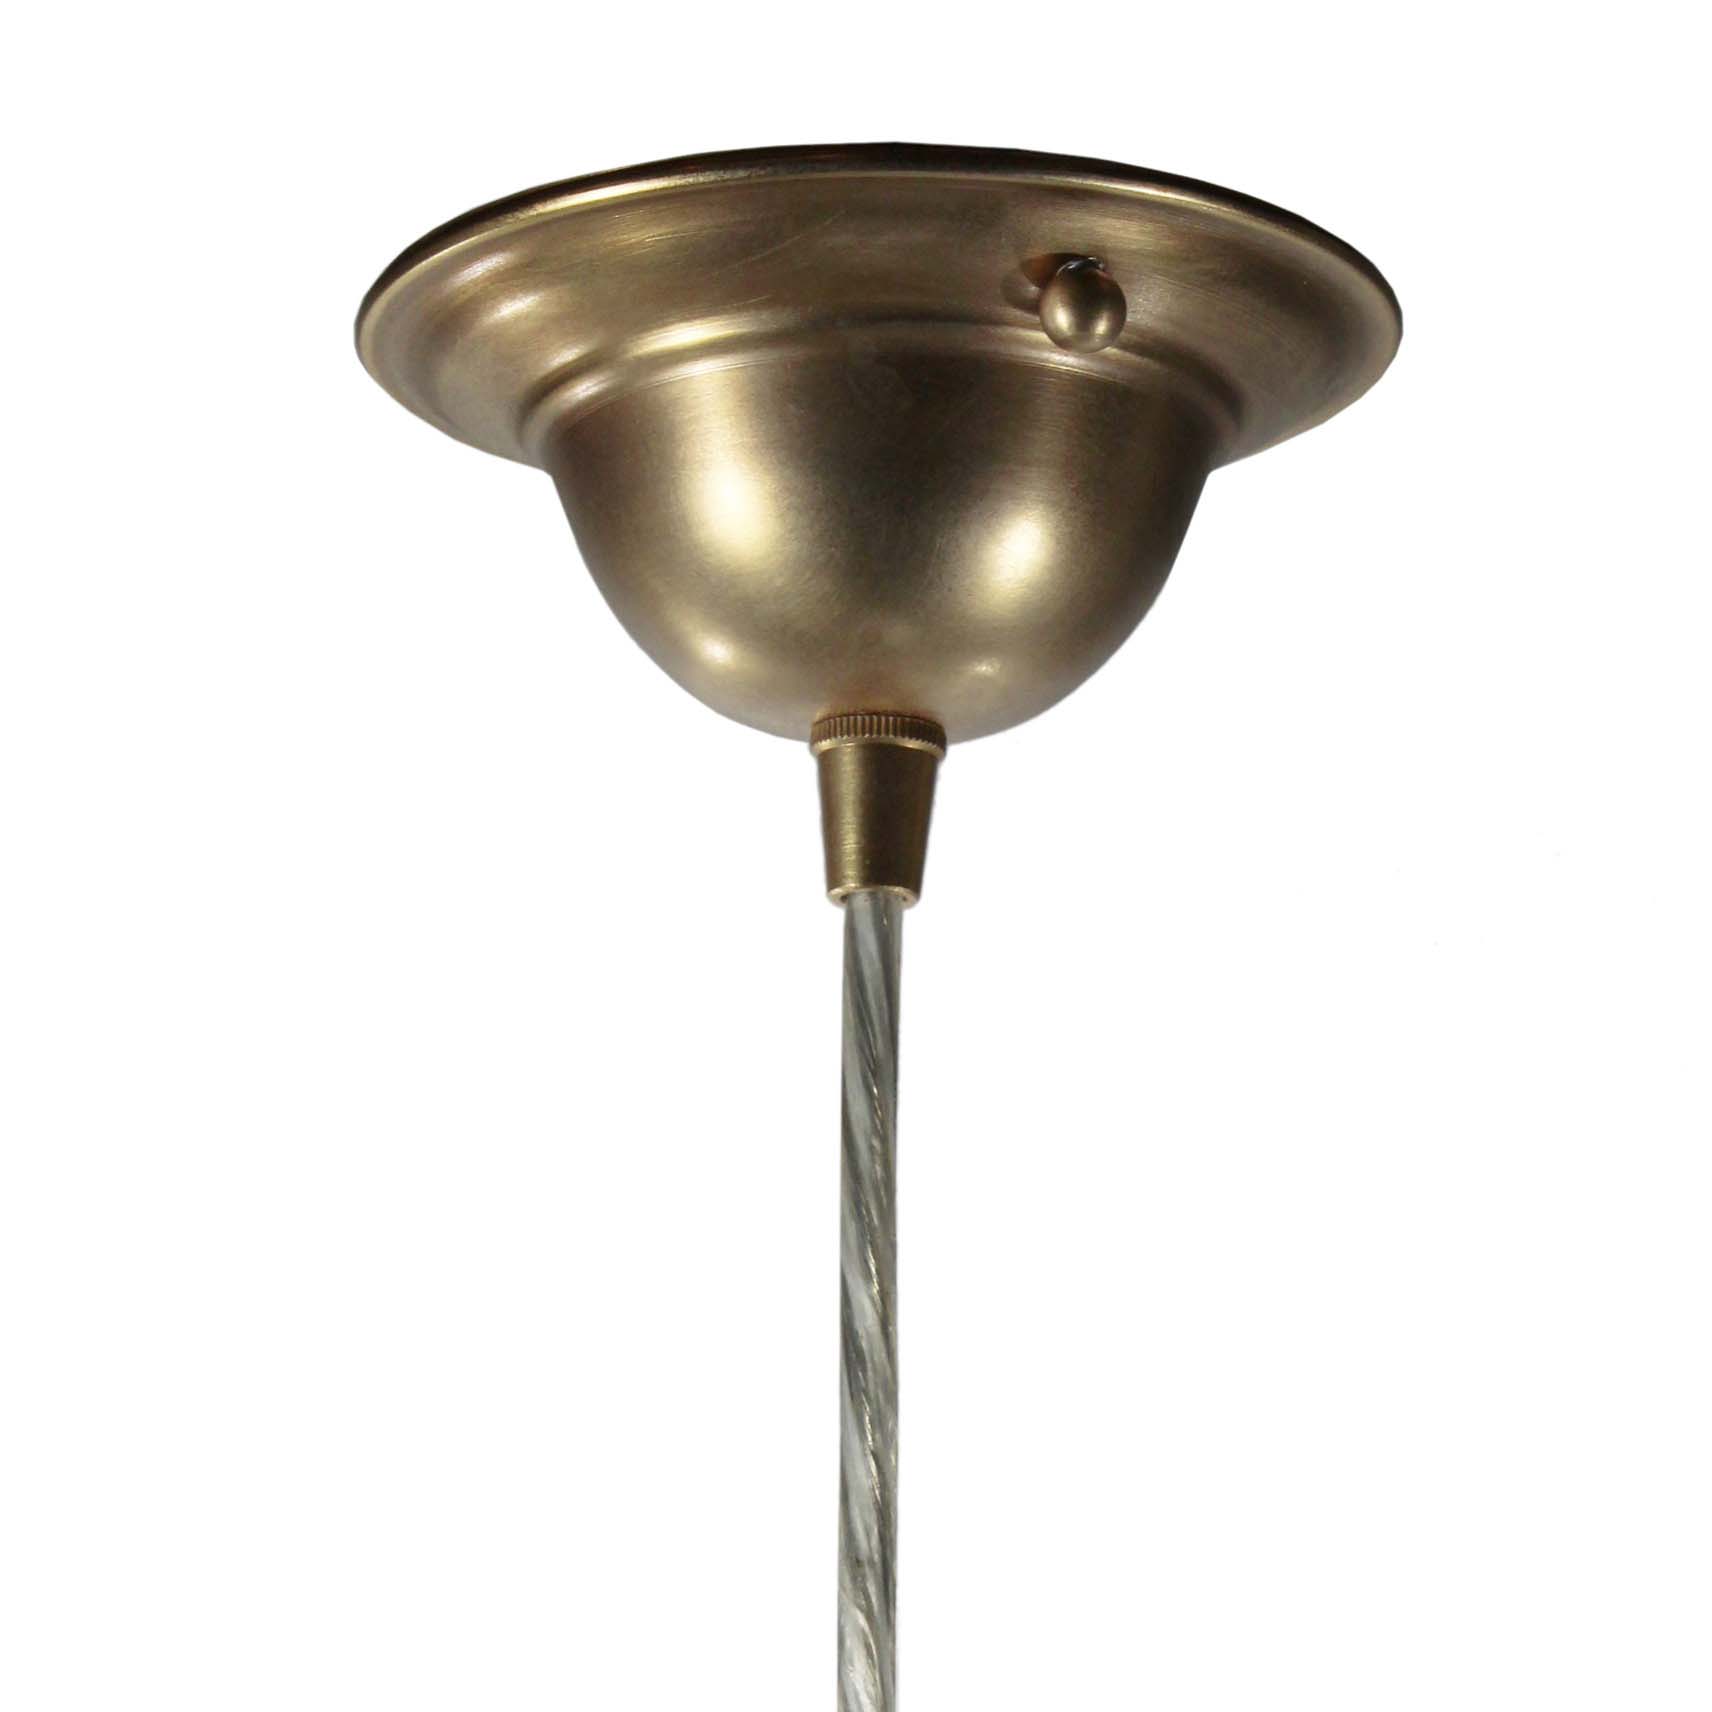 Brass Pendant Light with Milk Glass Shade, Antique Lighting-72427